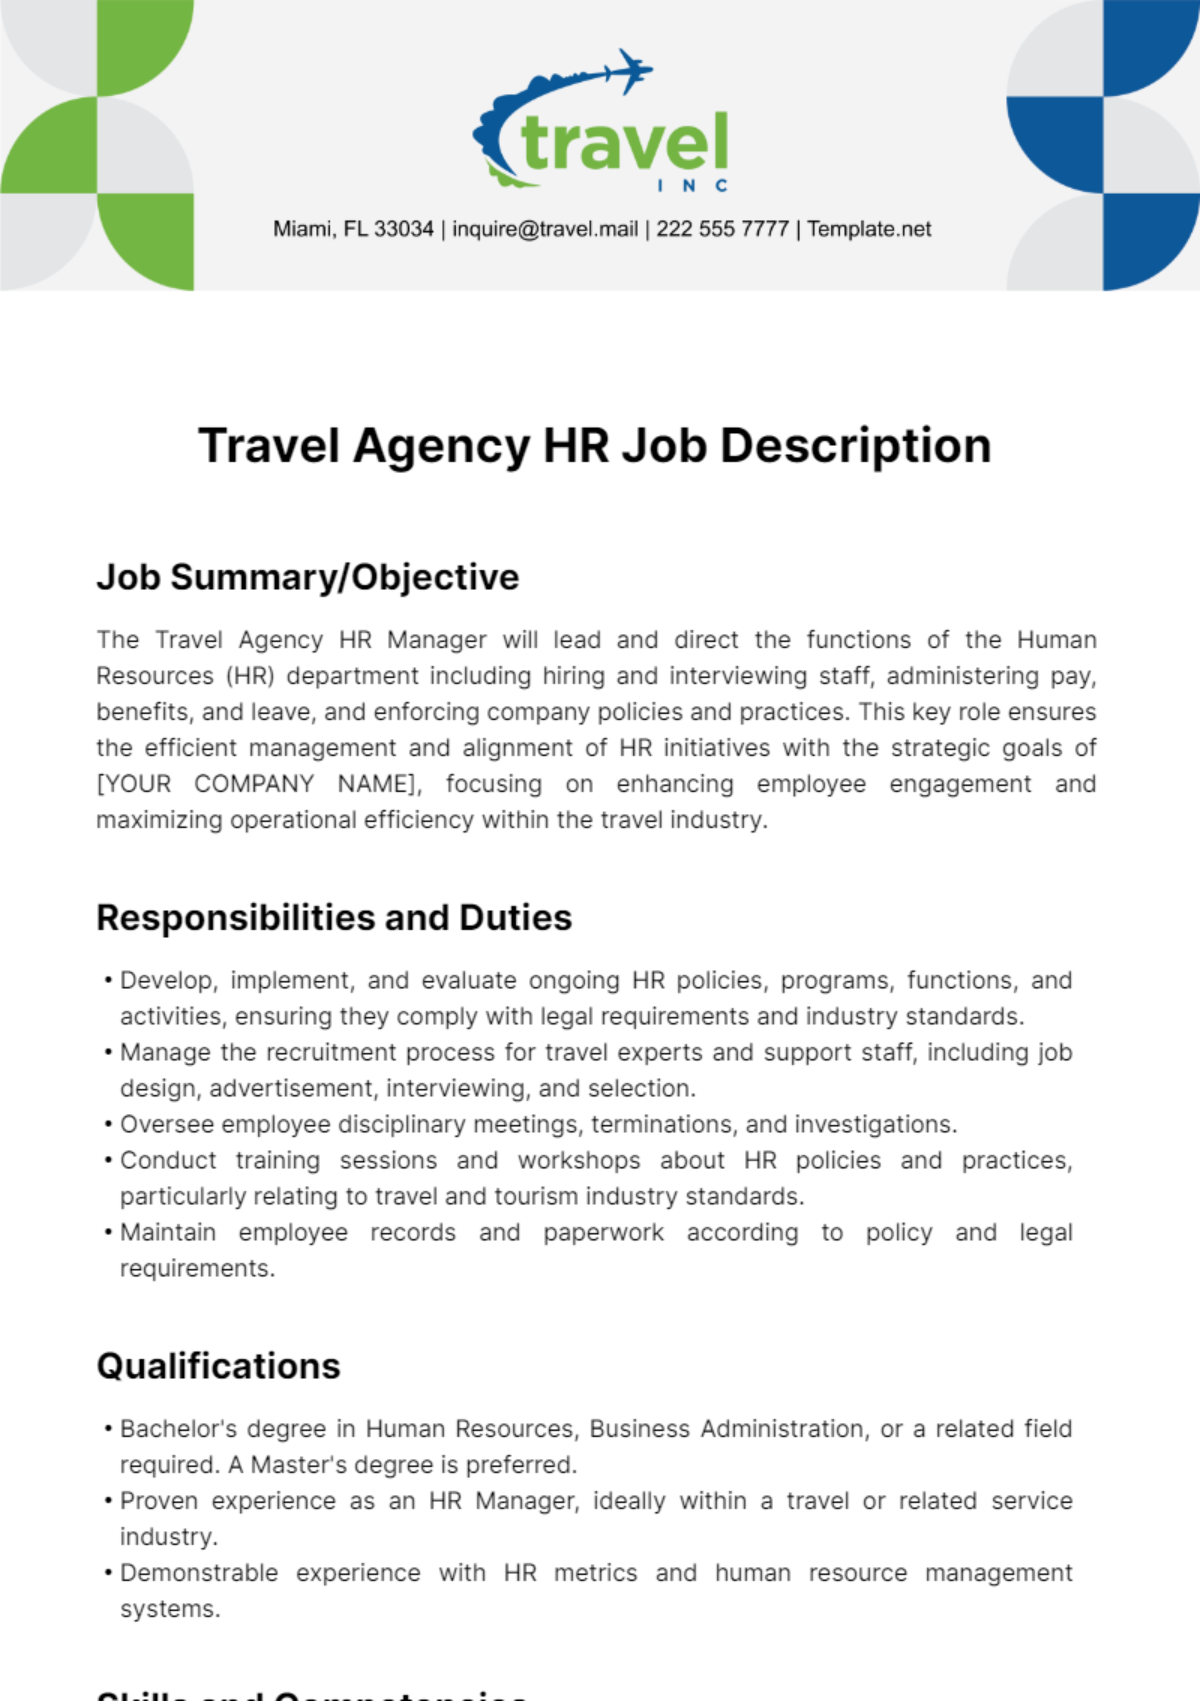 Travel Agency HR Job Description Template